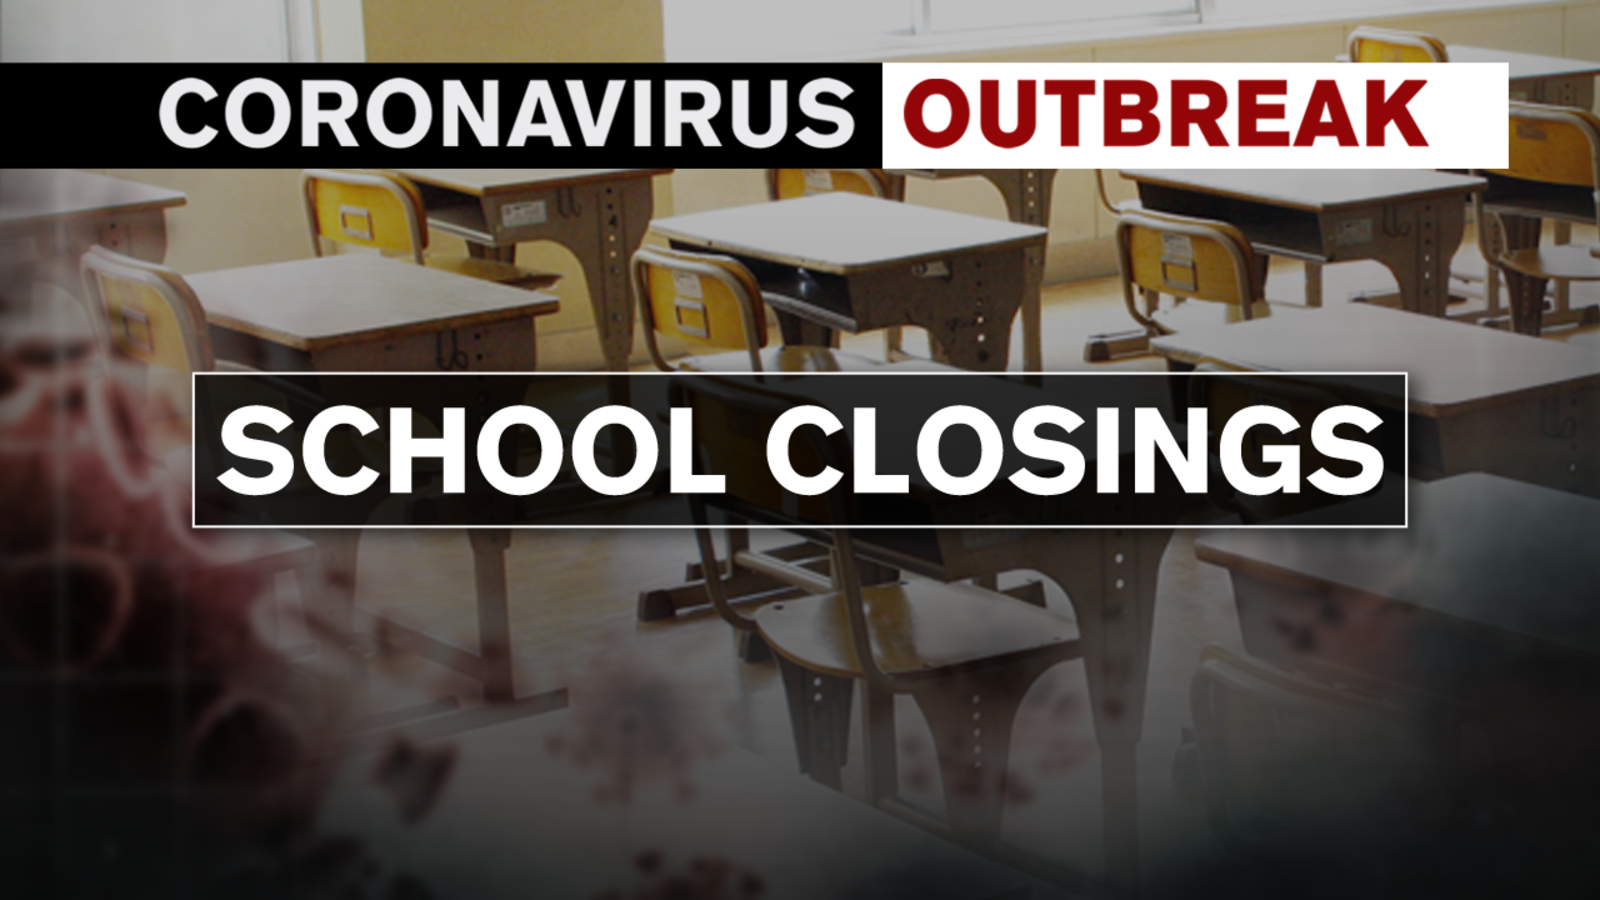 Summary of Local School Closures